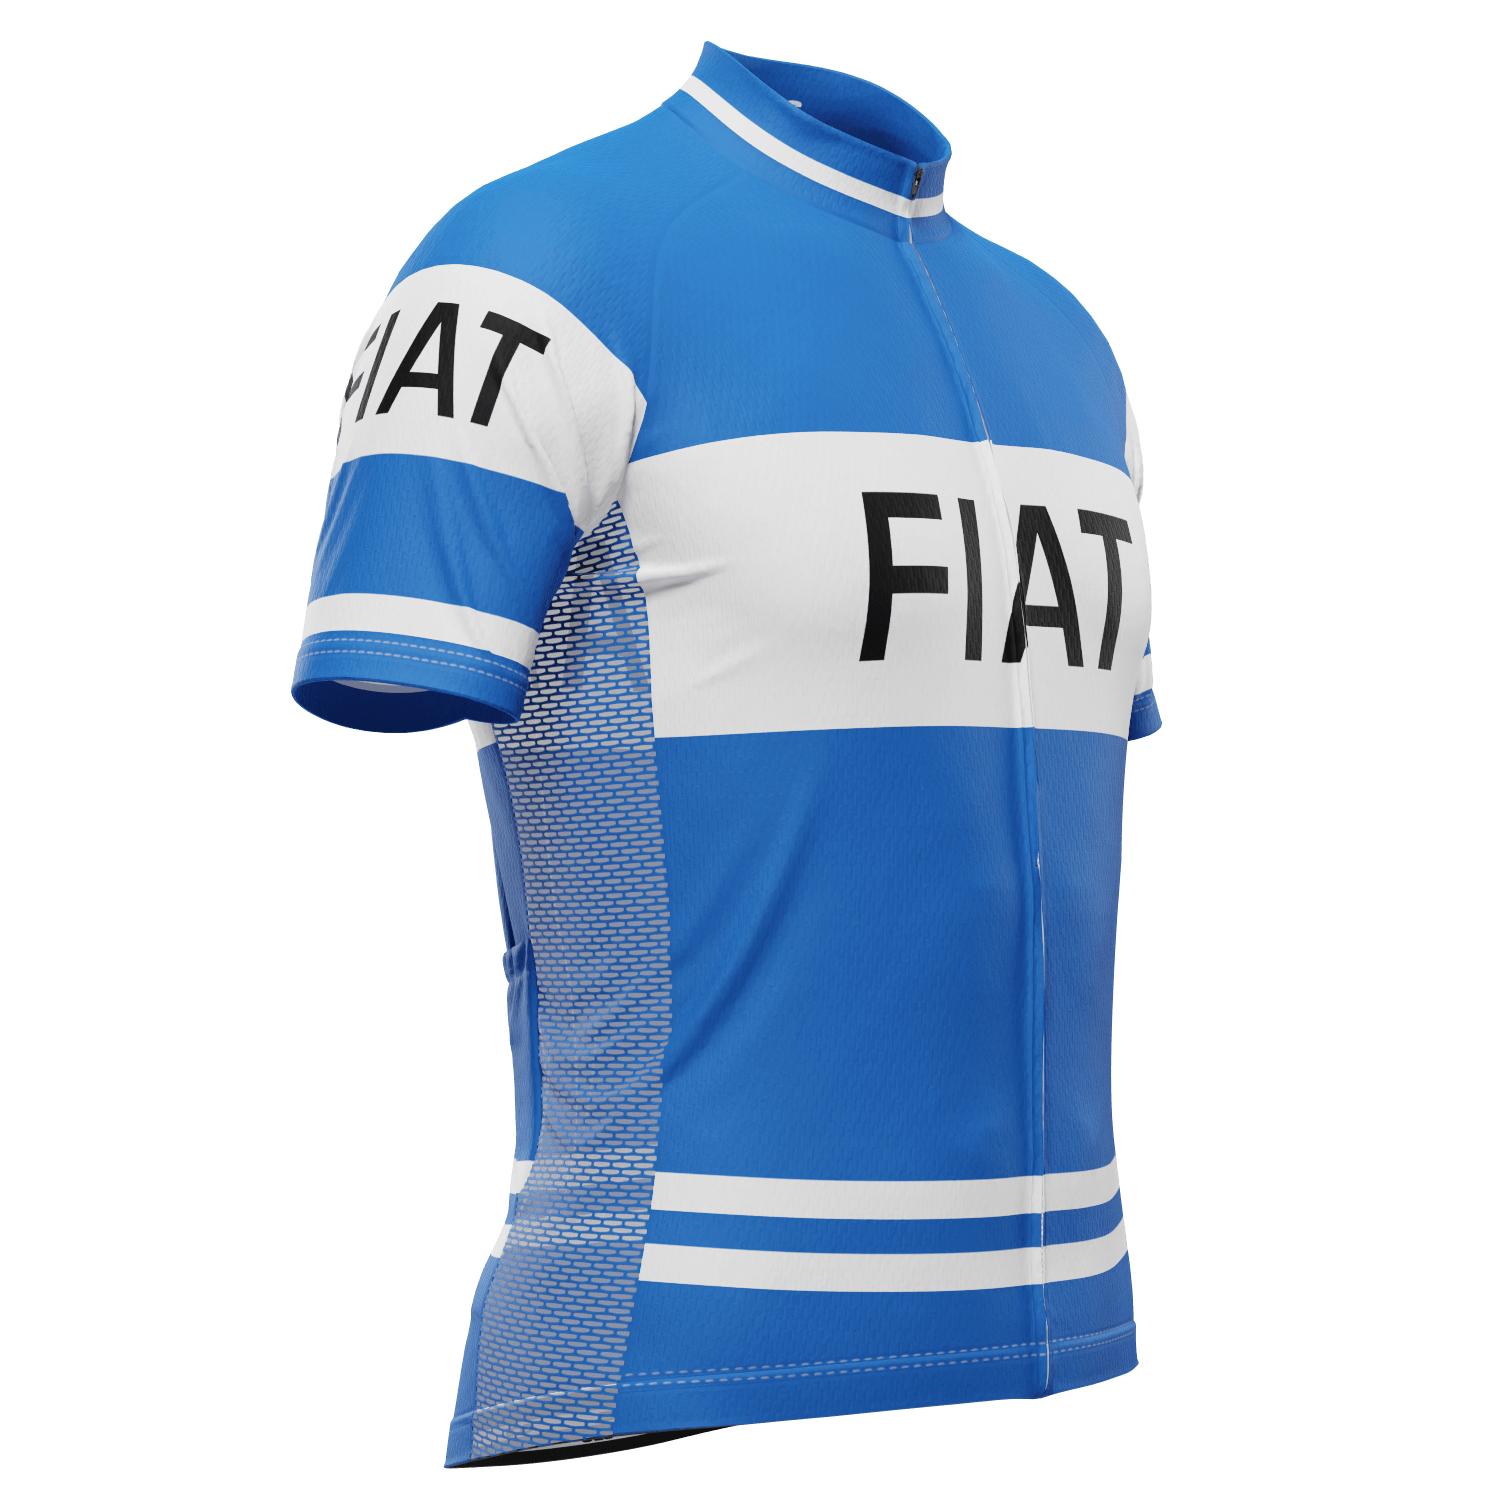 Men's Retro FIAT France Team Short Sleeve Cycling Jersey